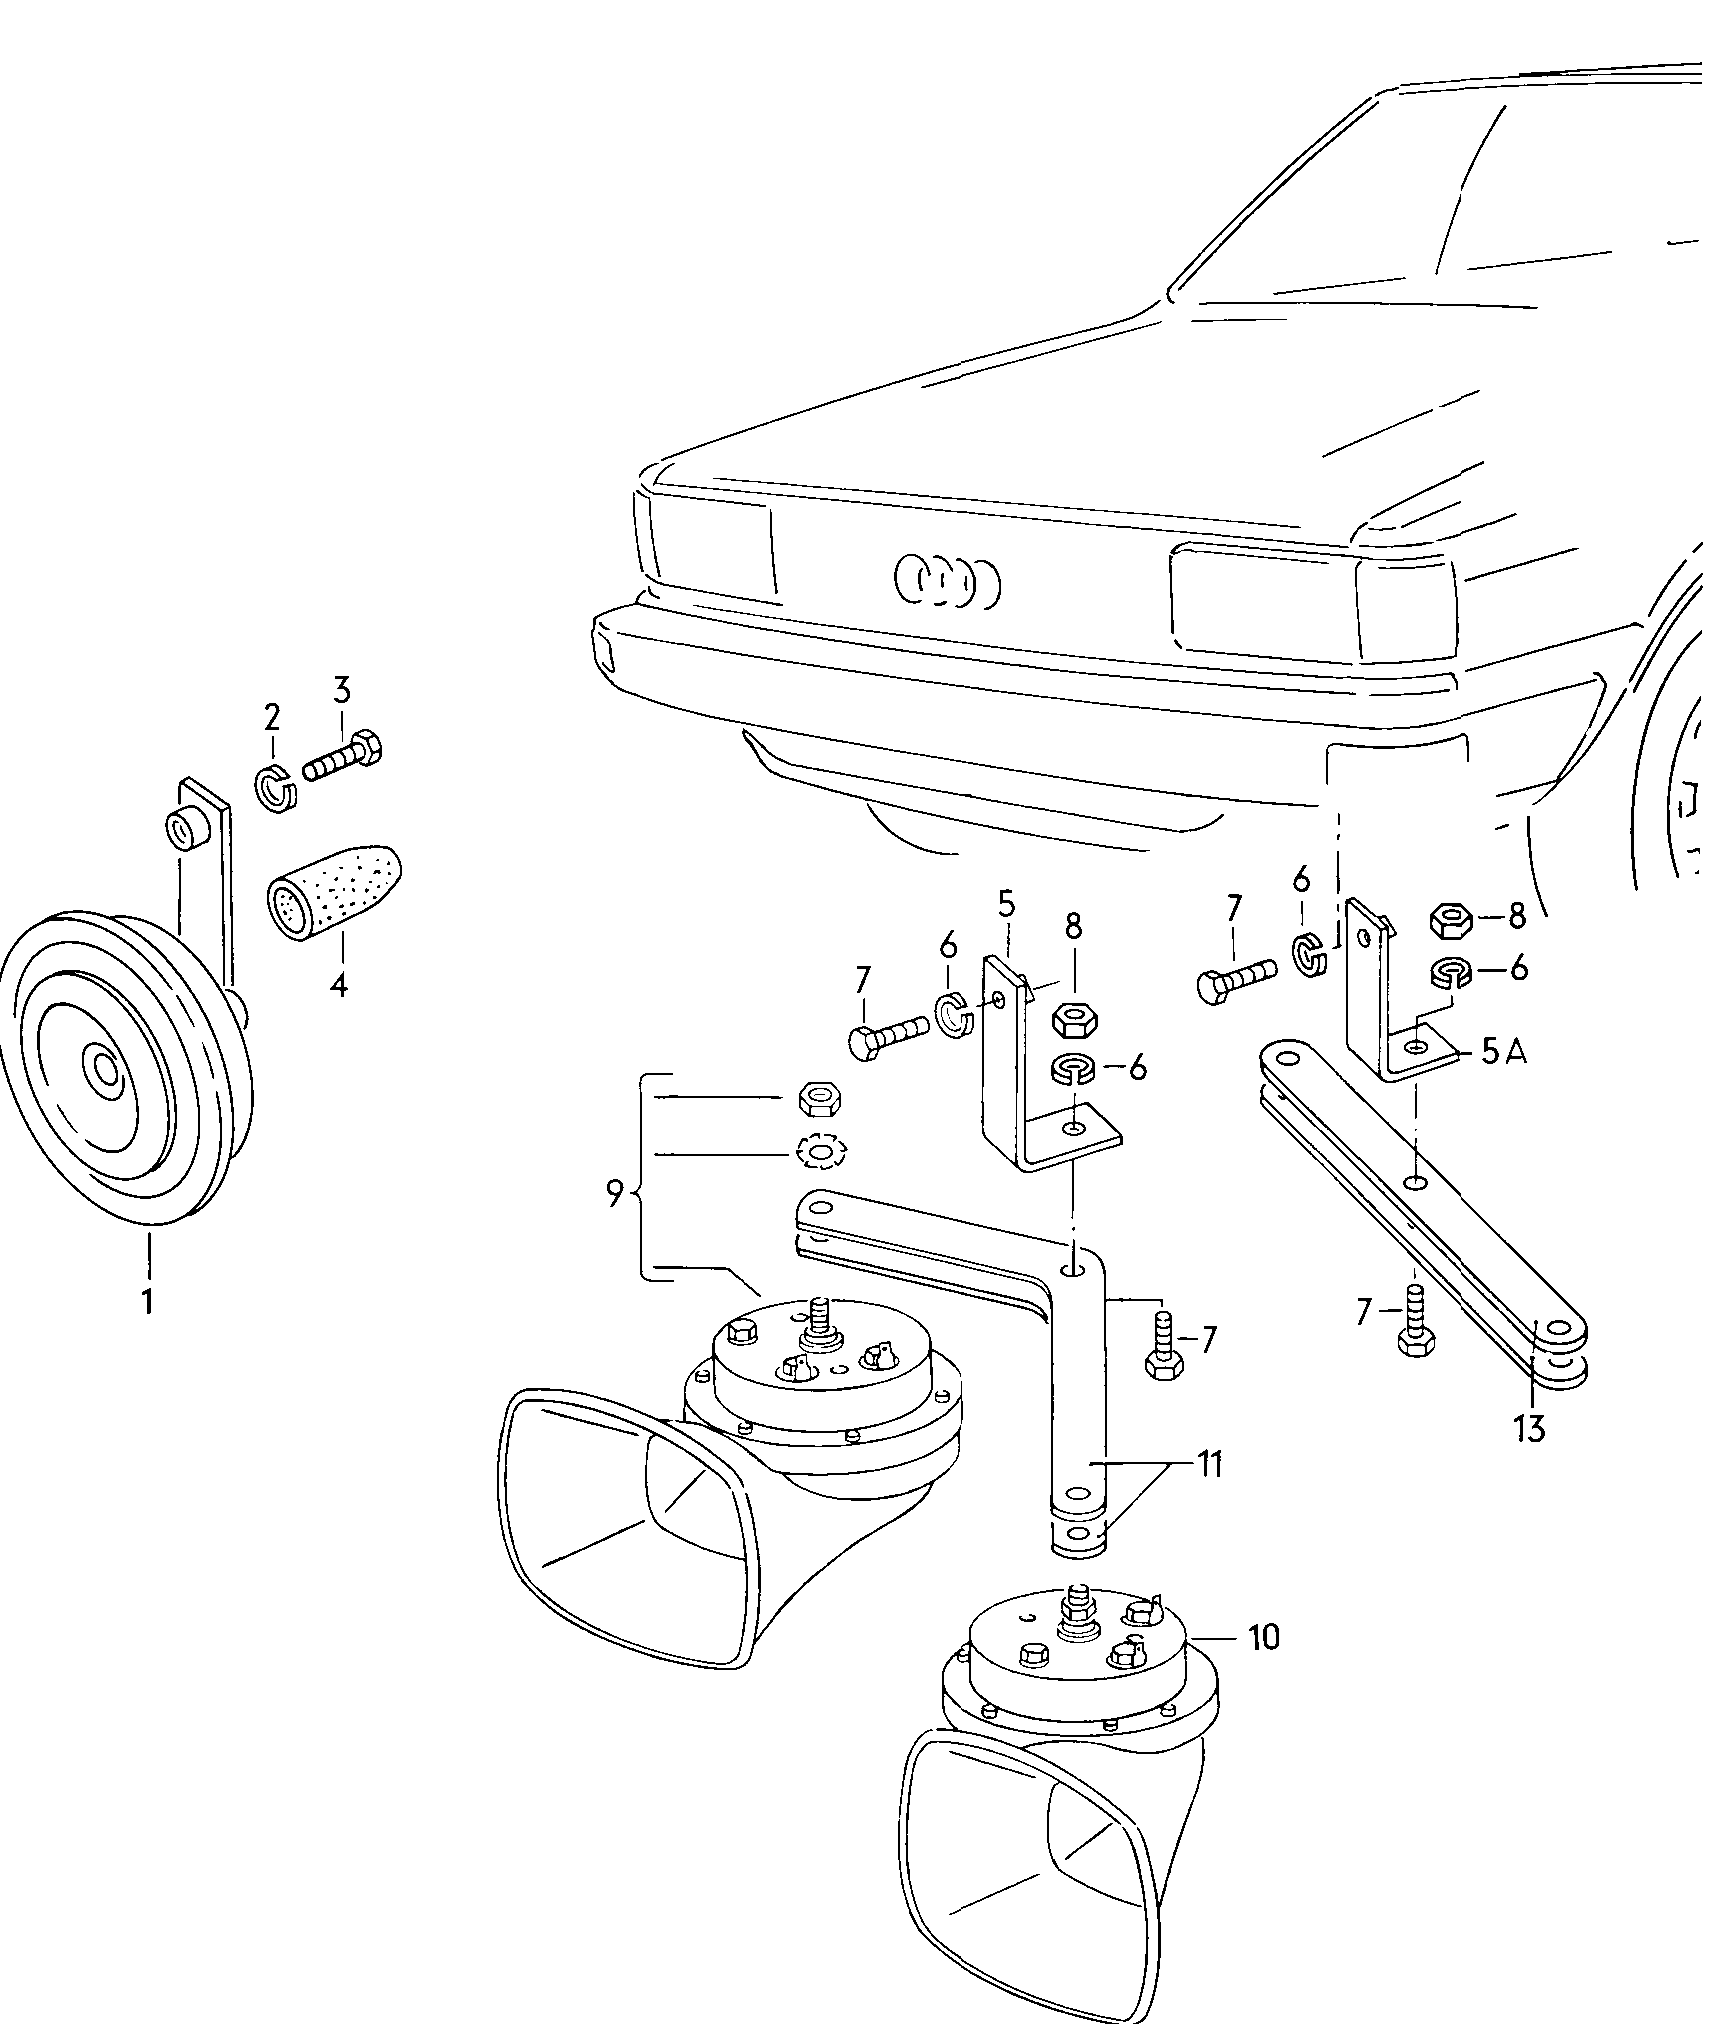 avvisatore acustico bitonale - Audi Coupe(ACO)  